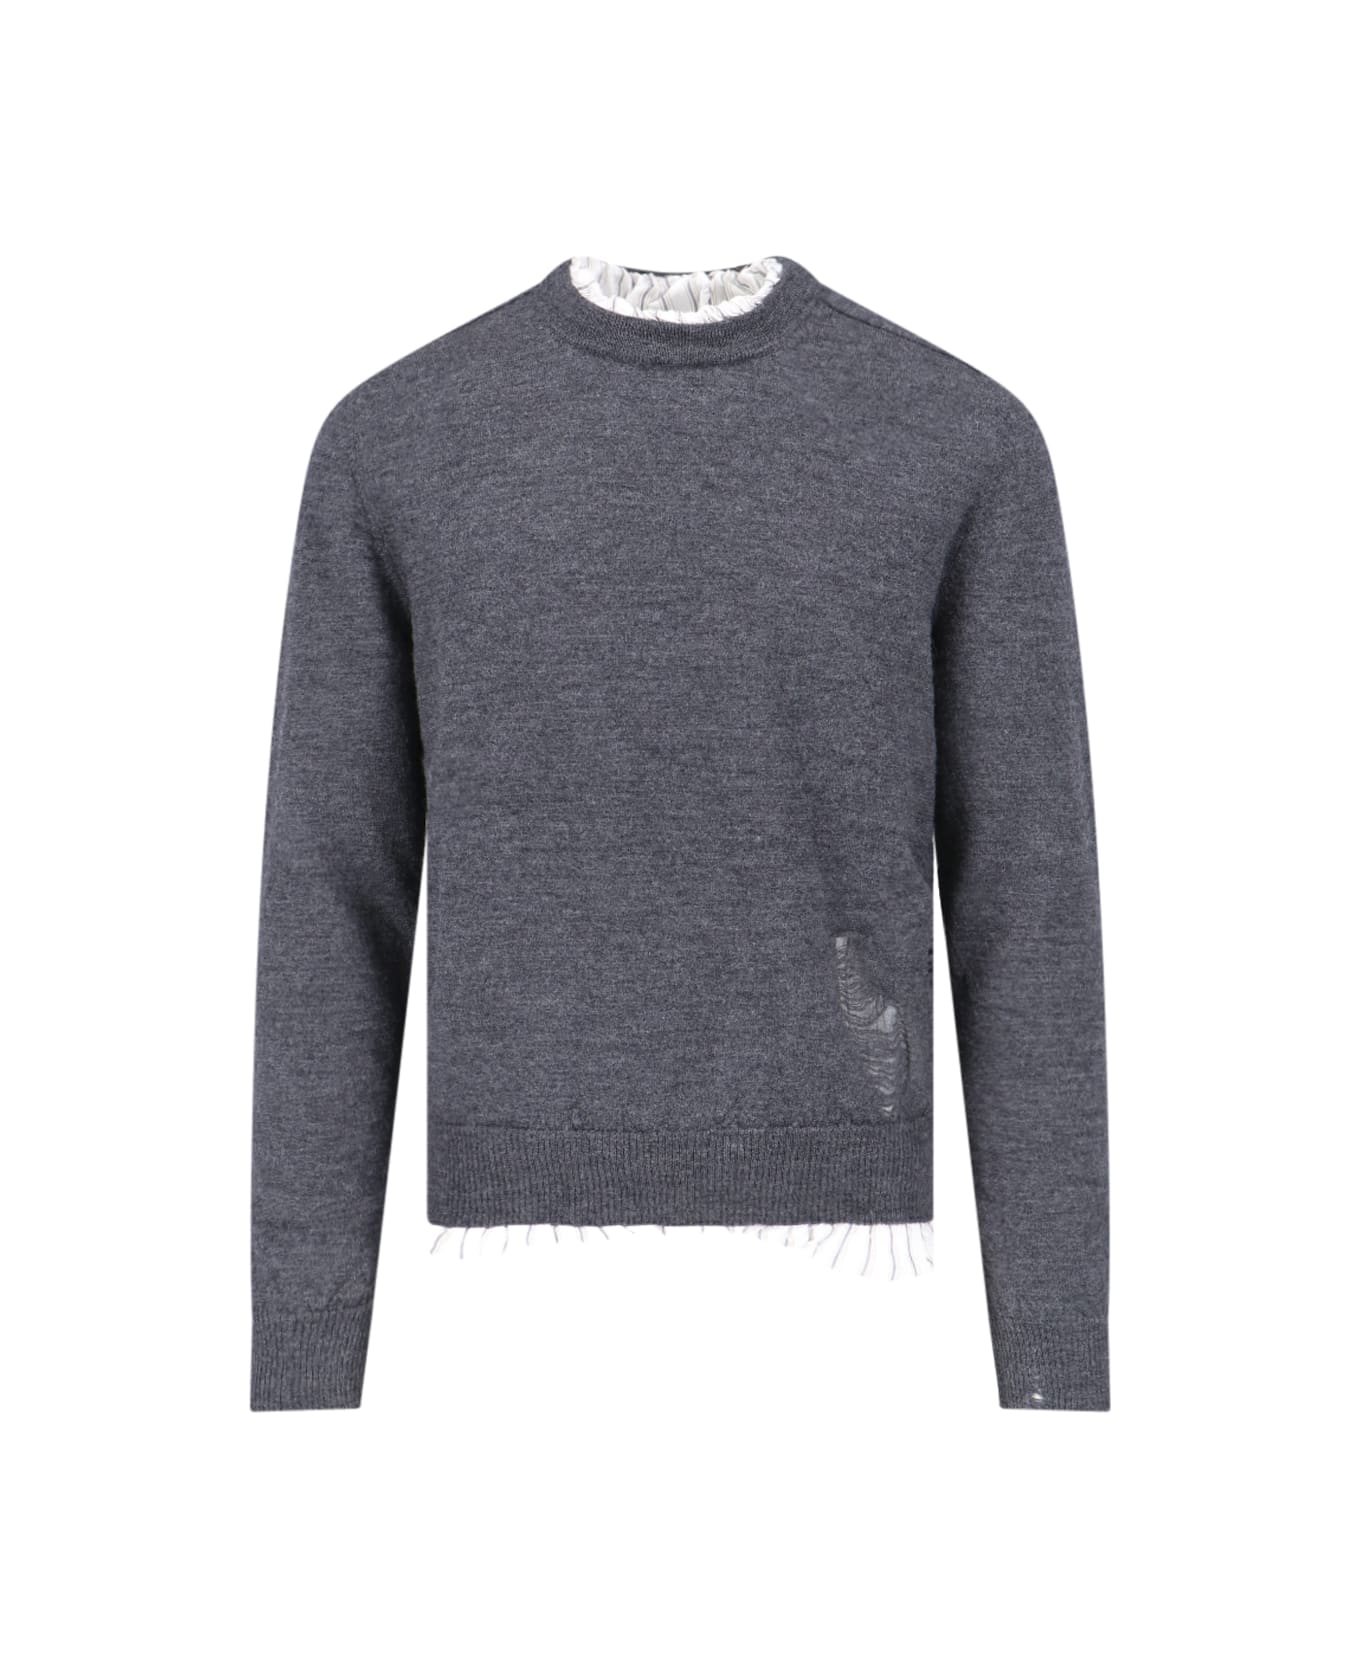 Maison Margiela Distressed Rib Sweatshirt - Grey